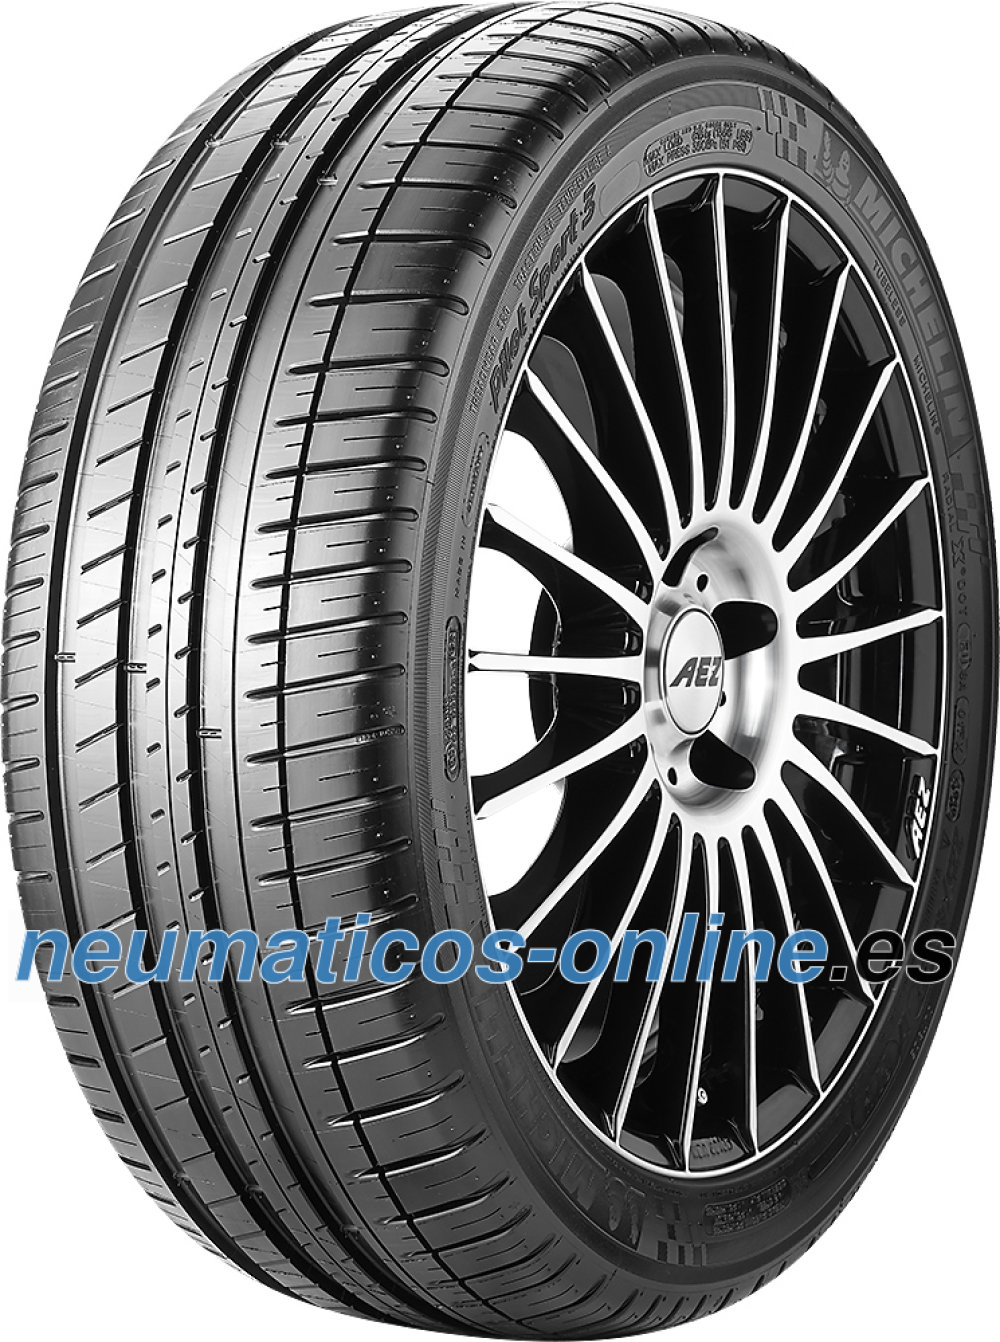 silencio Shipley Alcalde Michelin Pilot Sport 3 235/40 ZR18 95Y XL MO- neumaticos-online.es